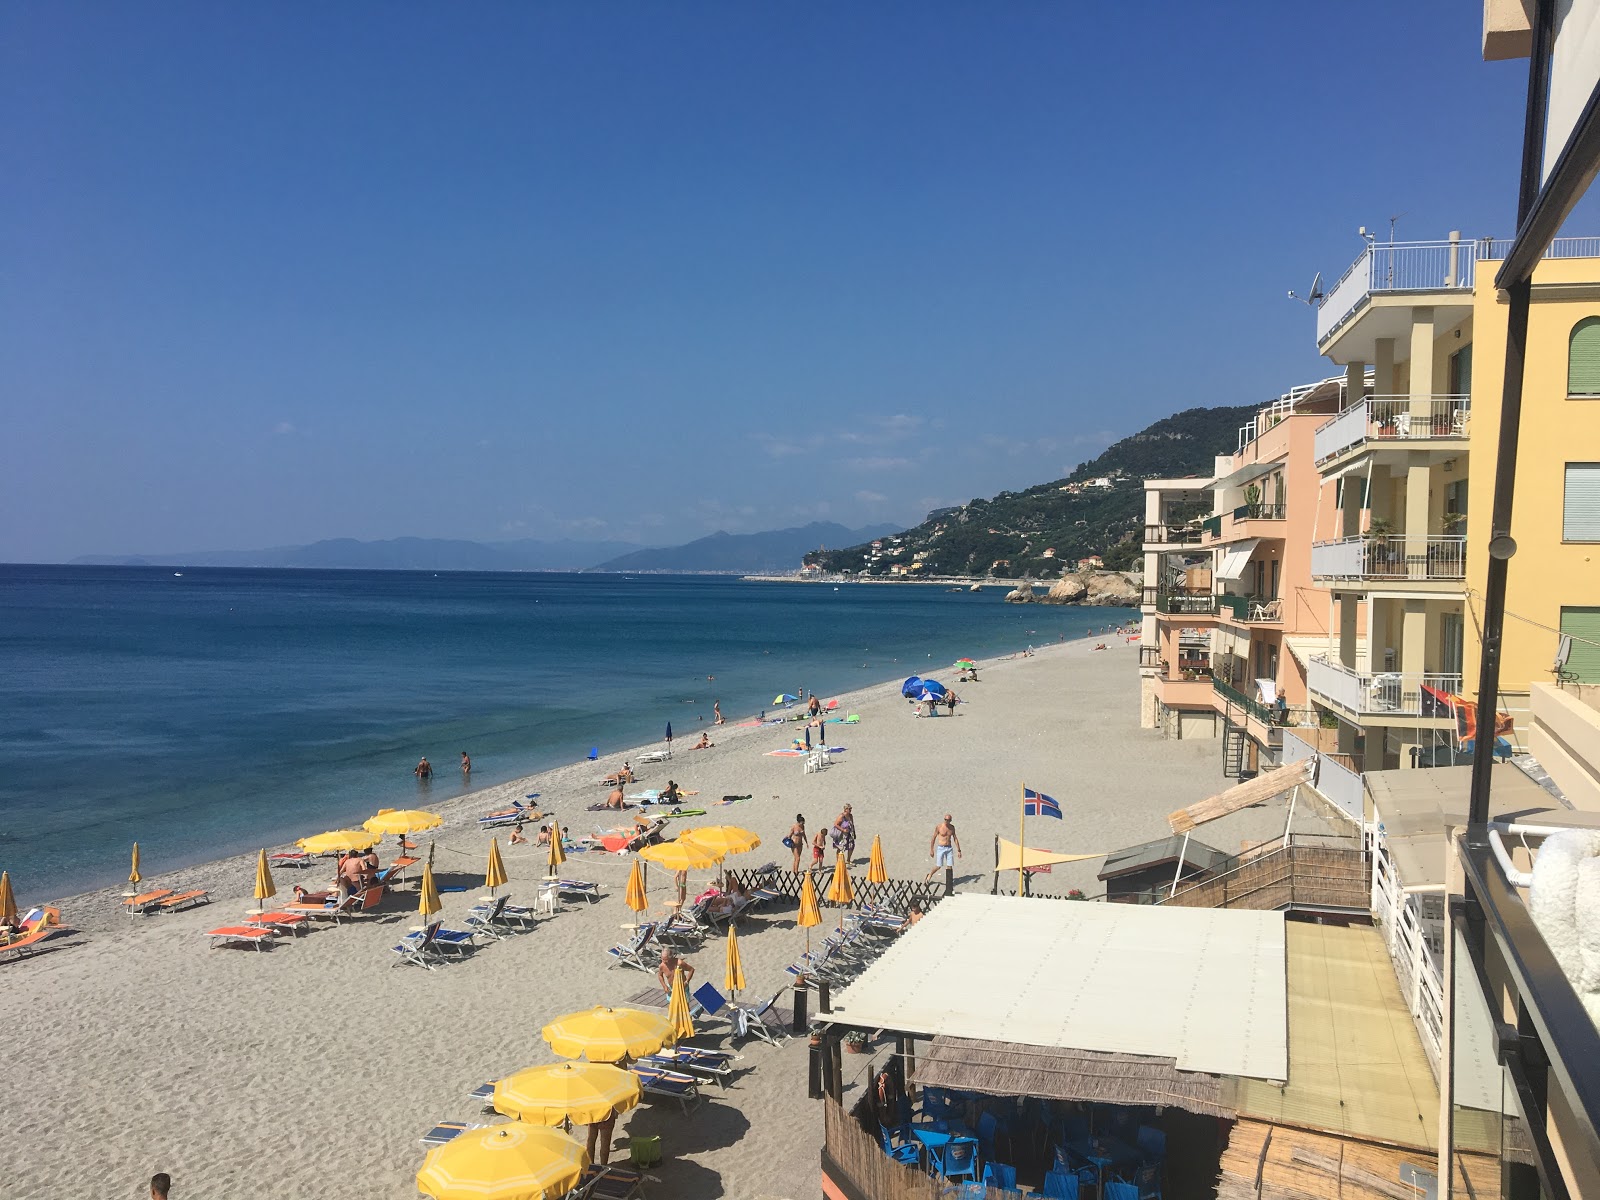 Fotografie cu Spiaggia libera di Varigotti și peisajul său frumos